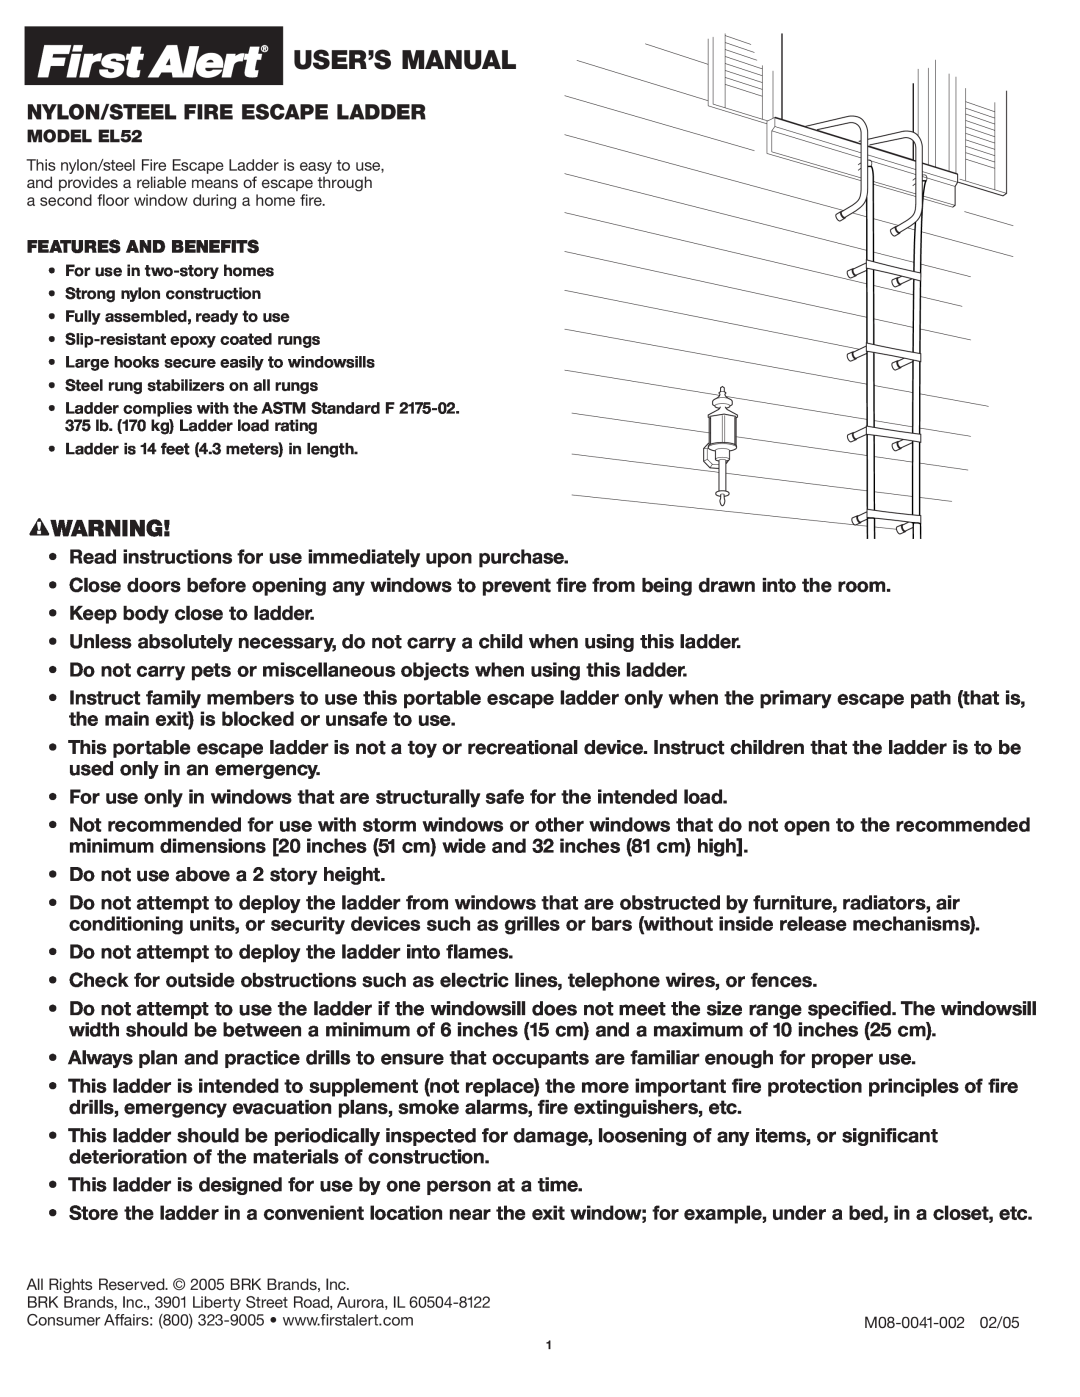 First Alert EL52 user manual Nylon/Steel Fire Escape Ladder 